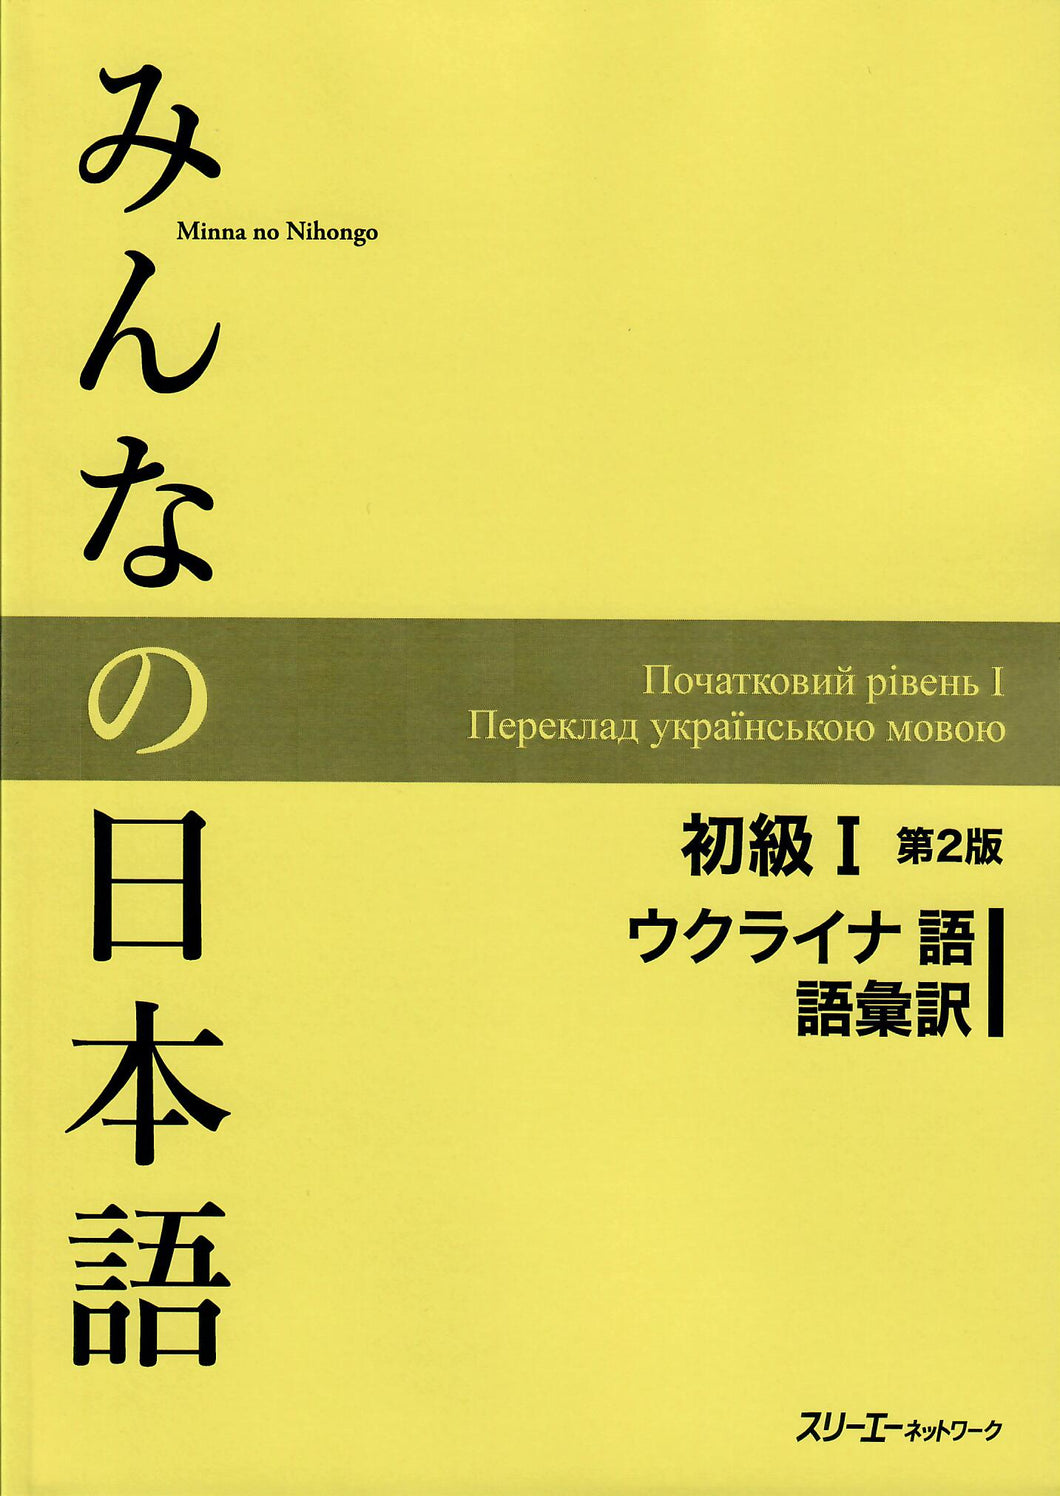 Minna No Nihongo Shokyu I, 2nd Edition, Vocabulary list and translations (語彙訳),  Ukrainian Version